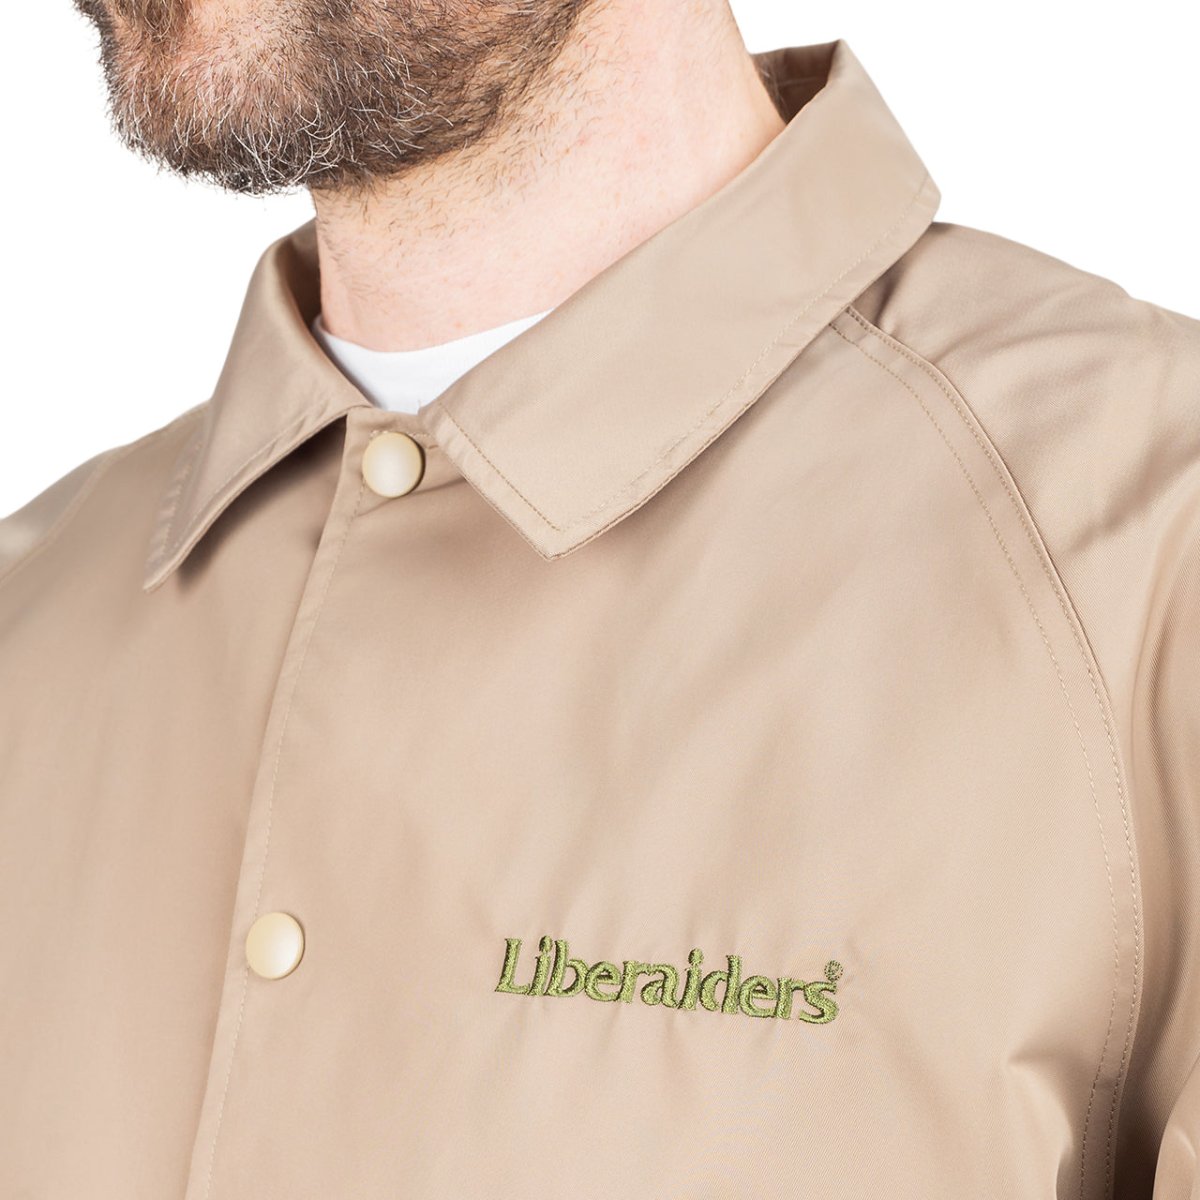 Liberaiders OG Embroidery Coach Jacket (Beige)